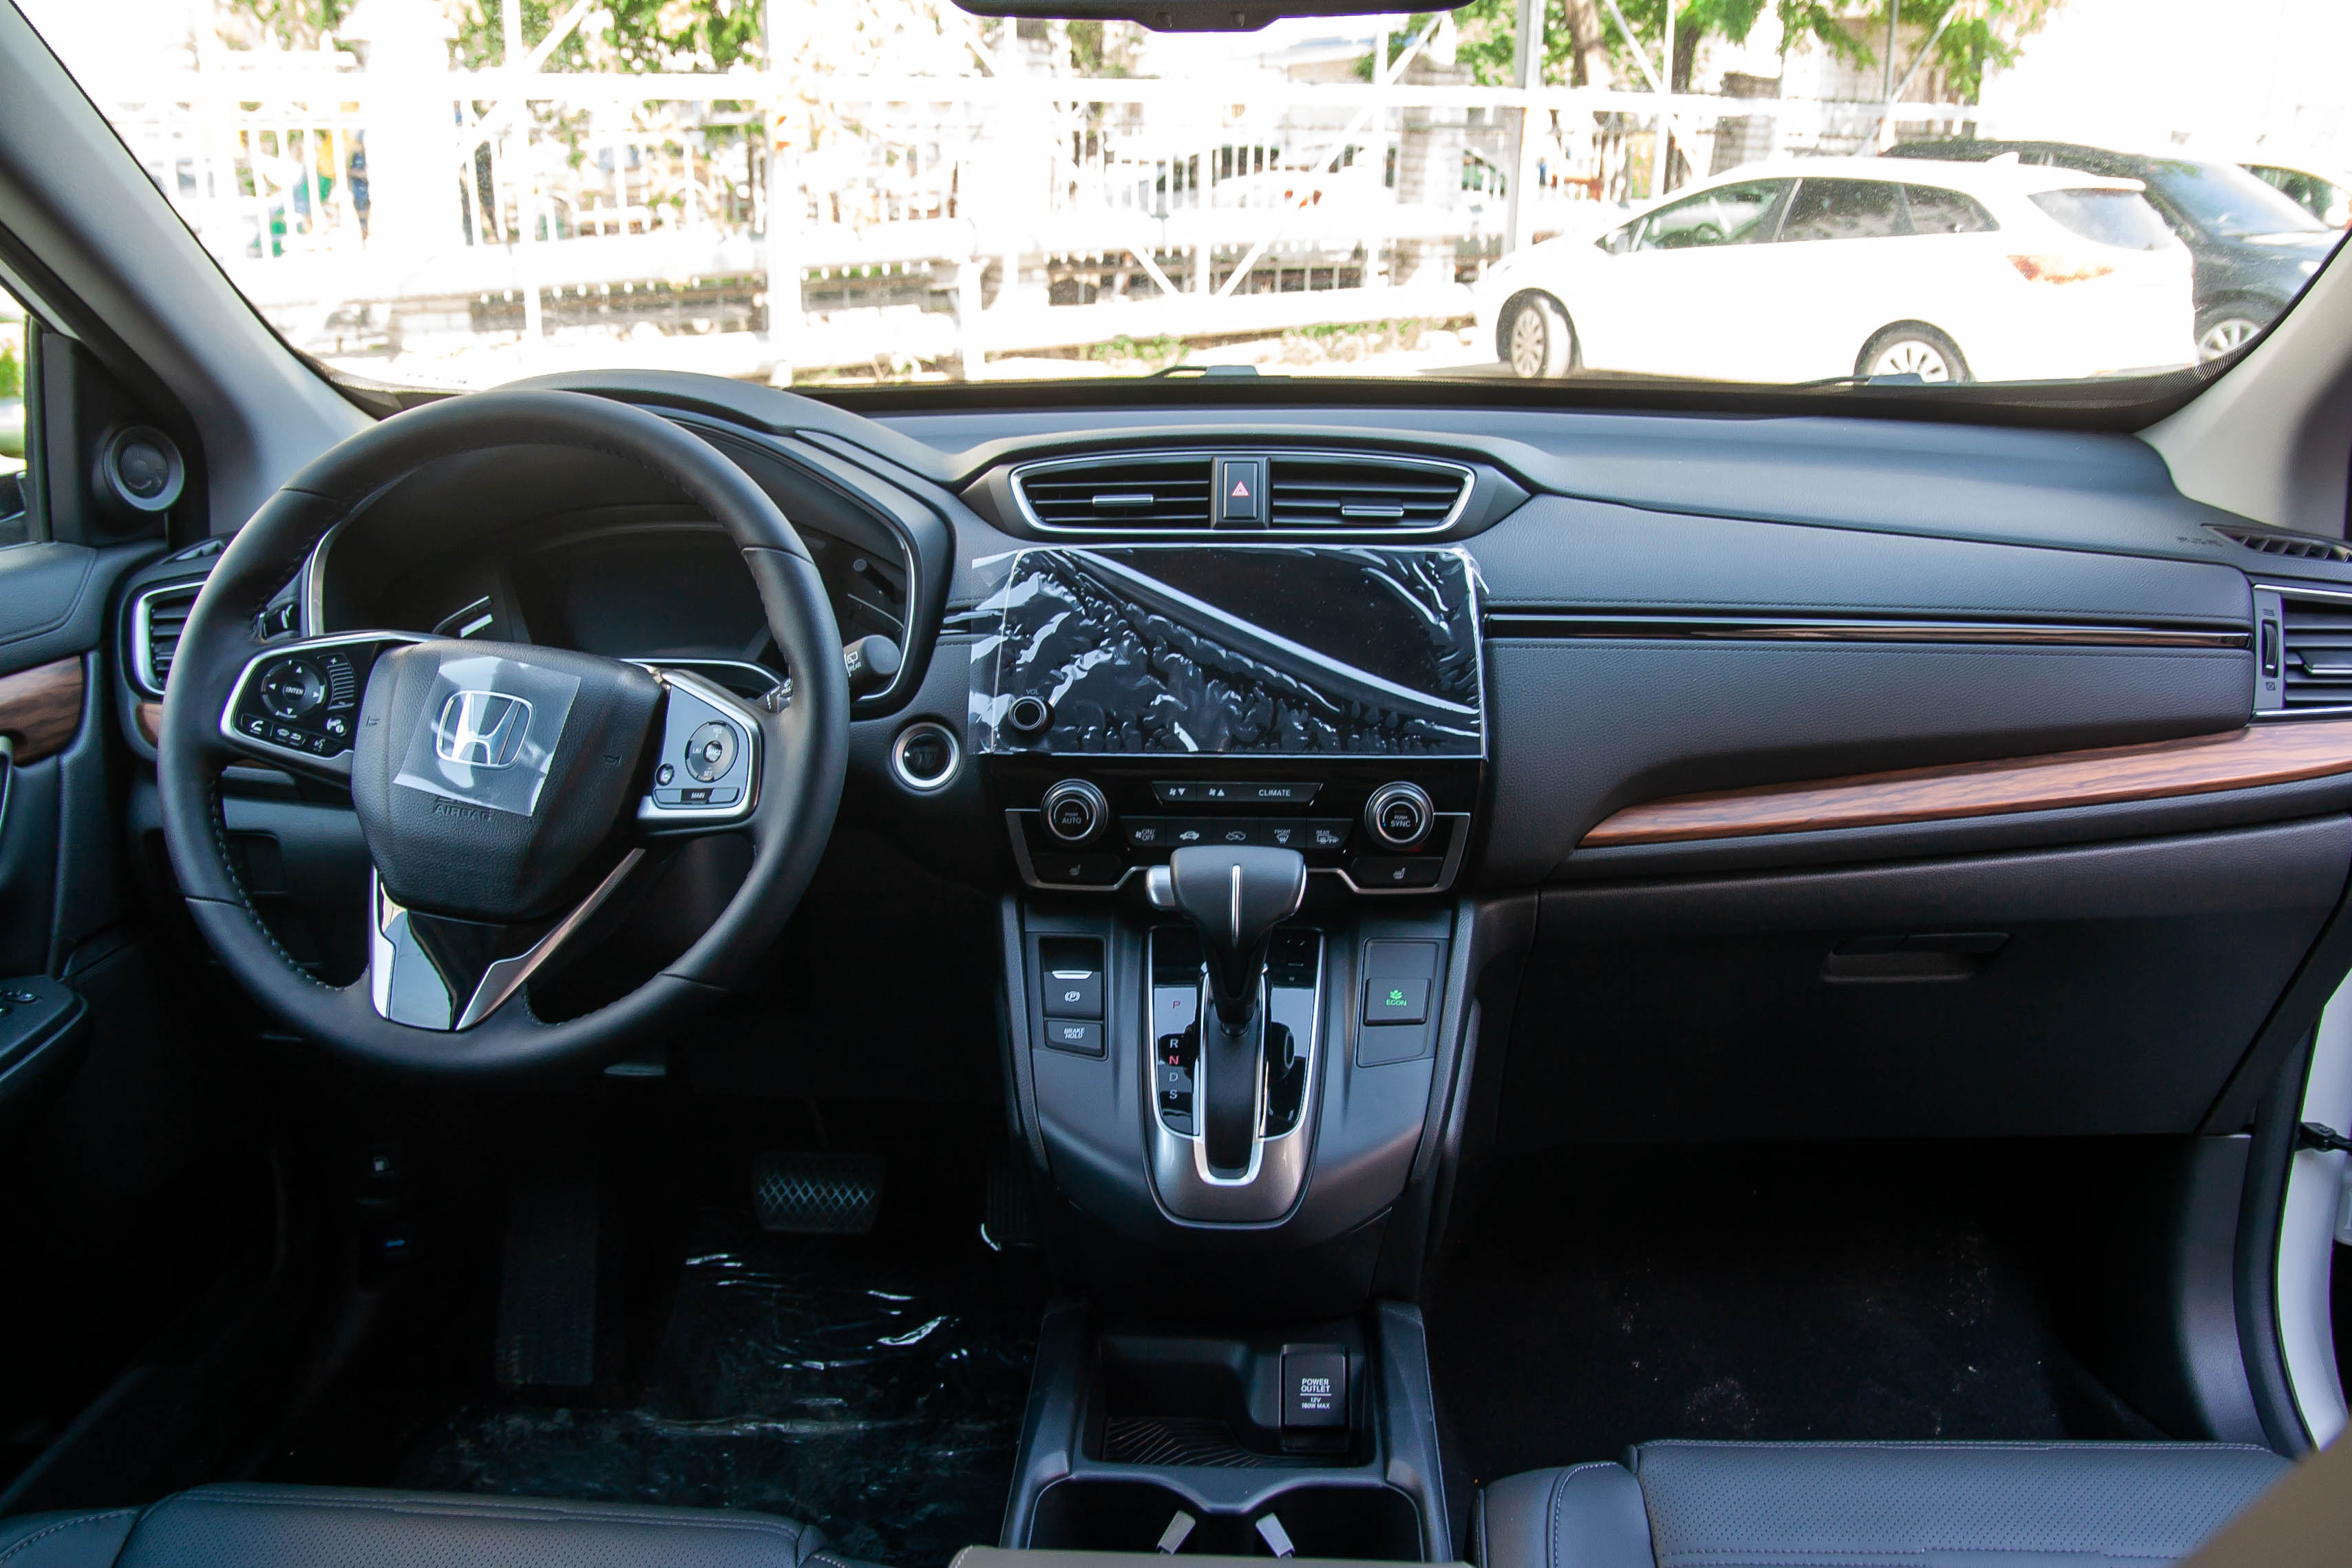 Расстояние между сидениями в Honda CR-V увеличено